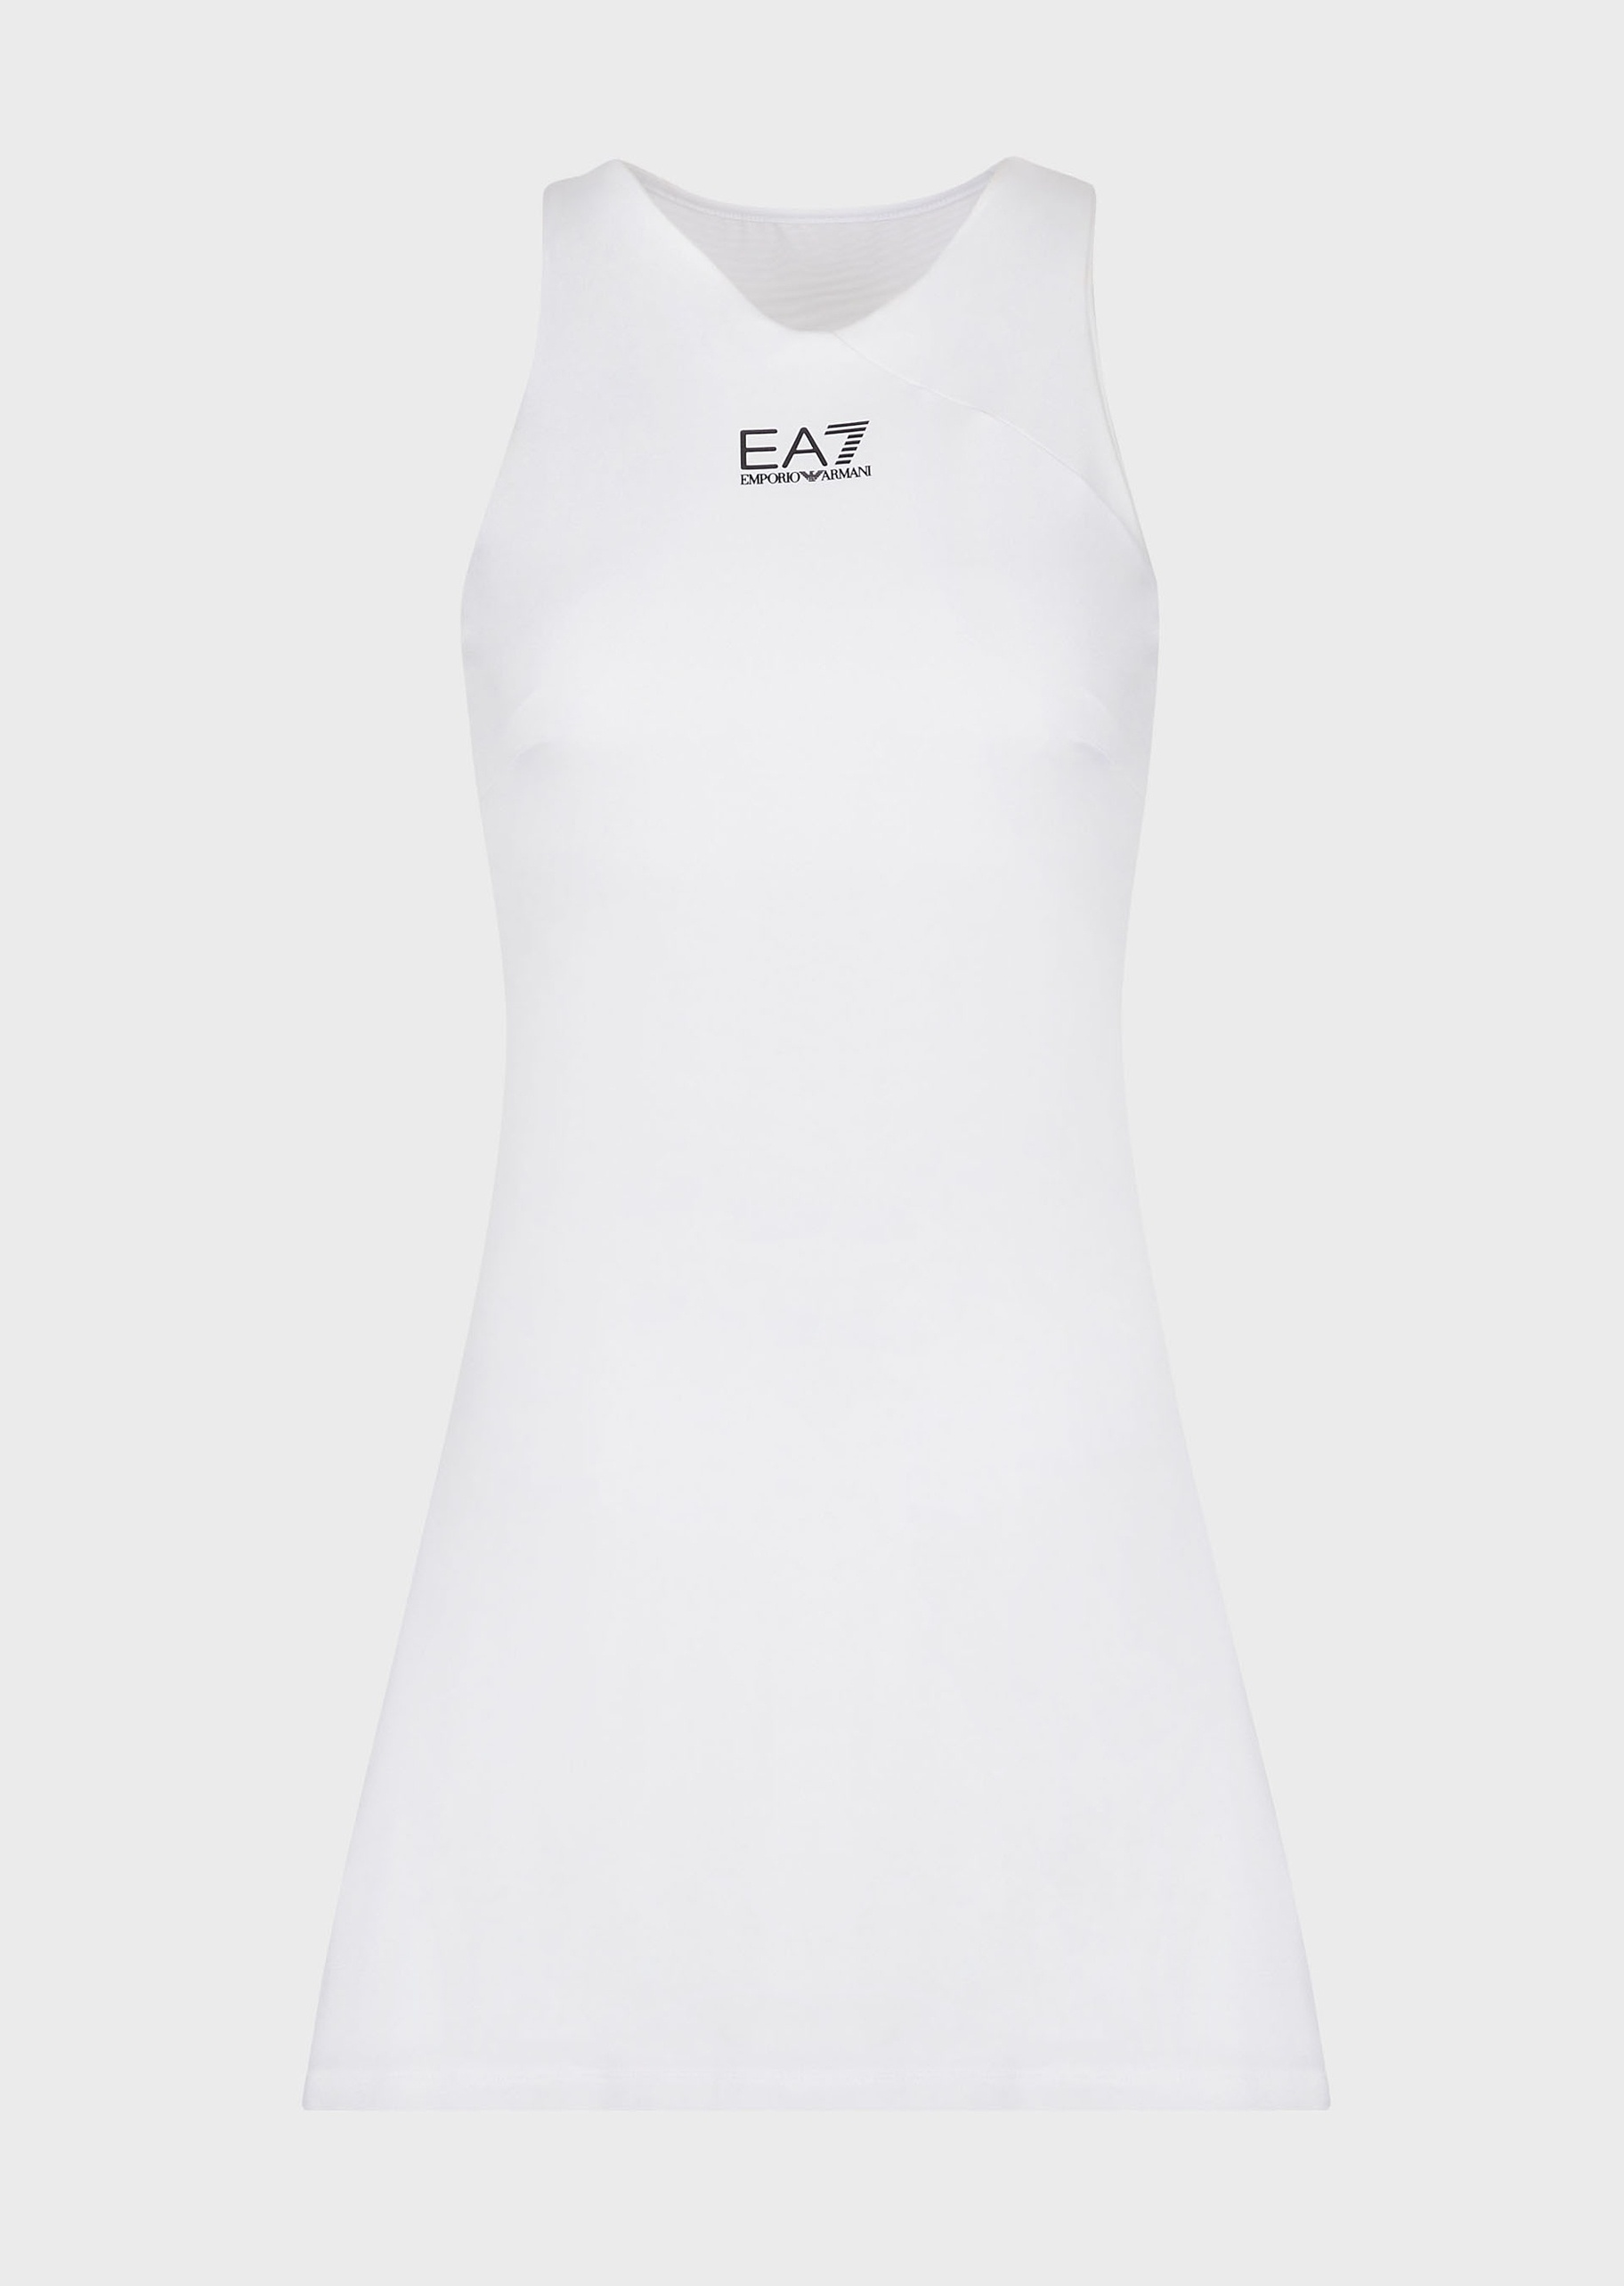 EA7 女士拼接无袖网球连衣裙